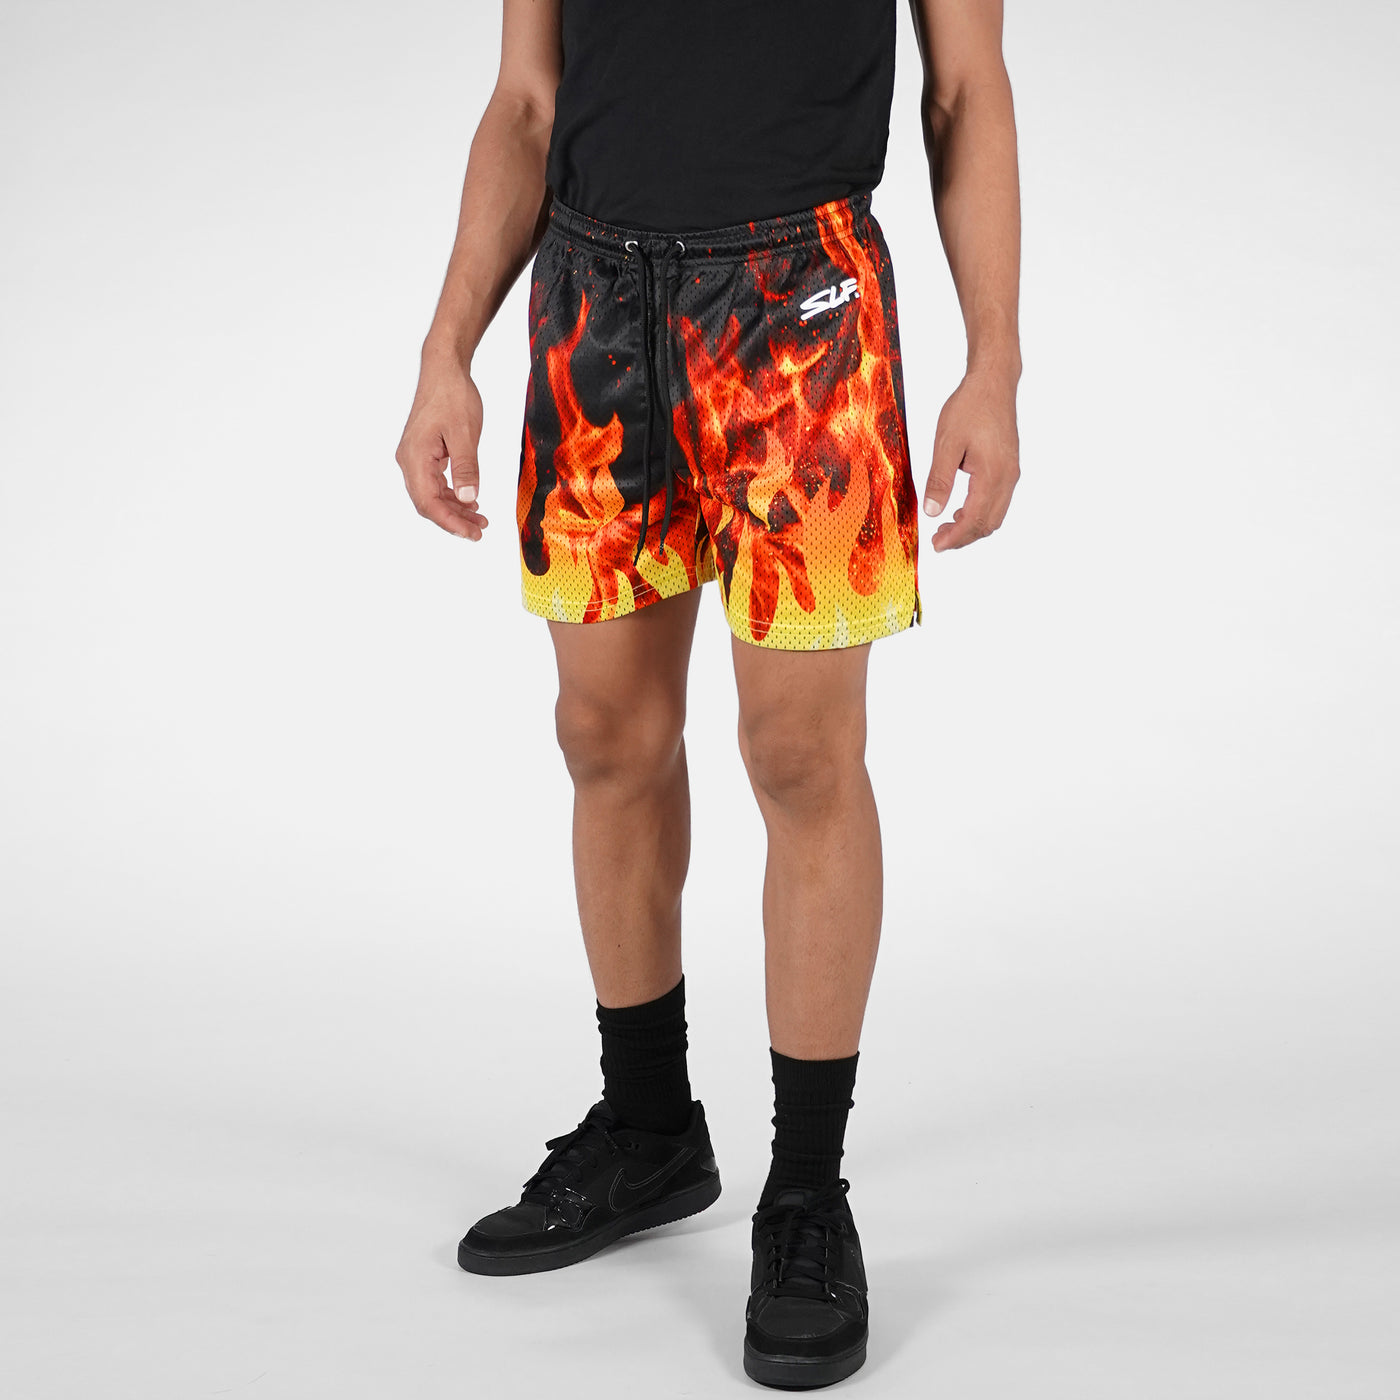 Black Fire Shorts - 7"